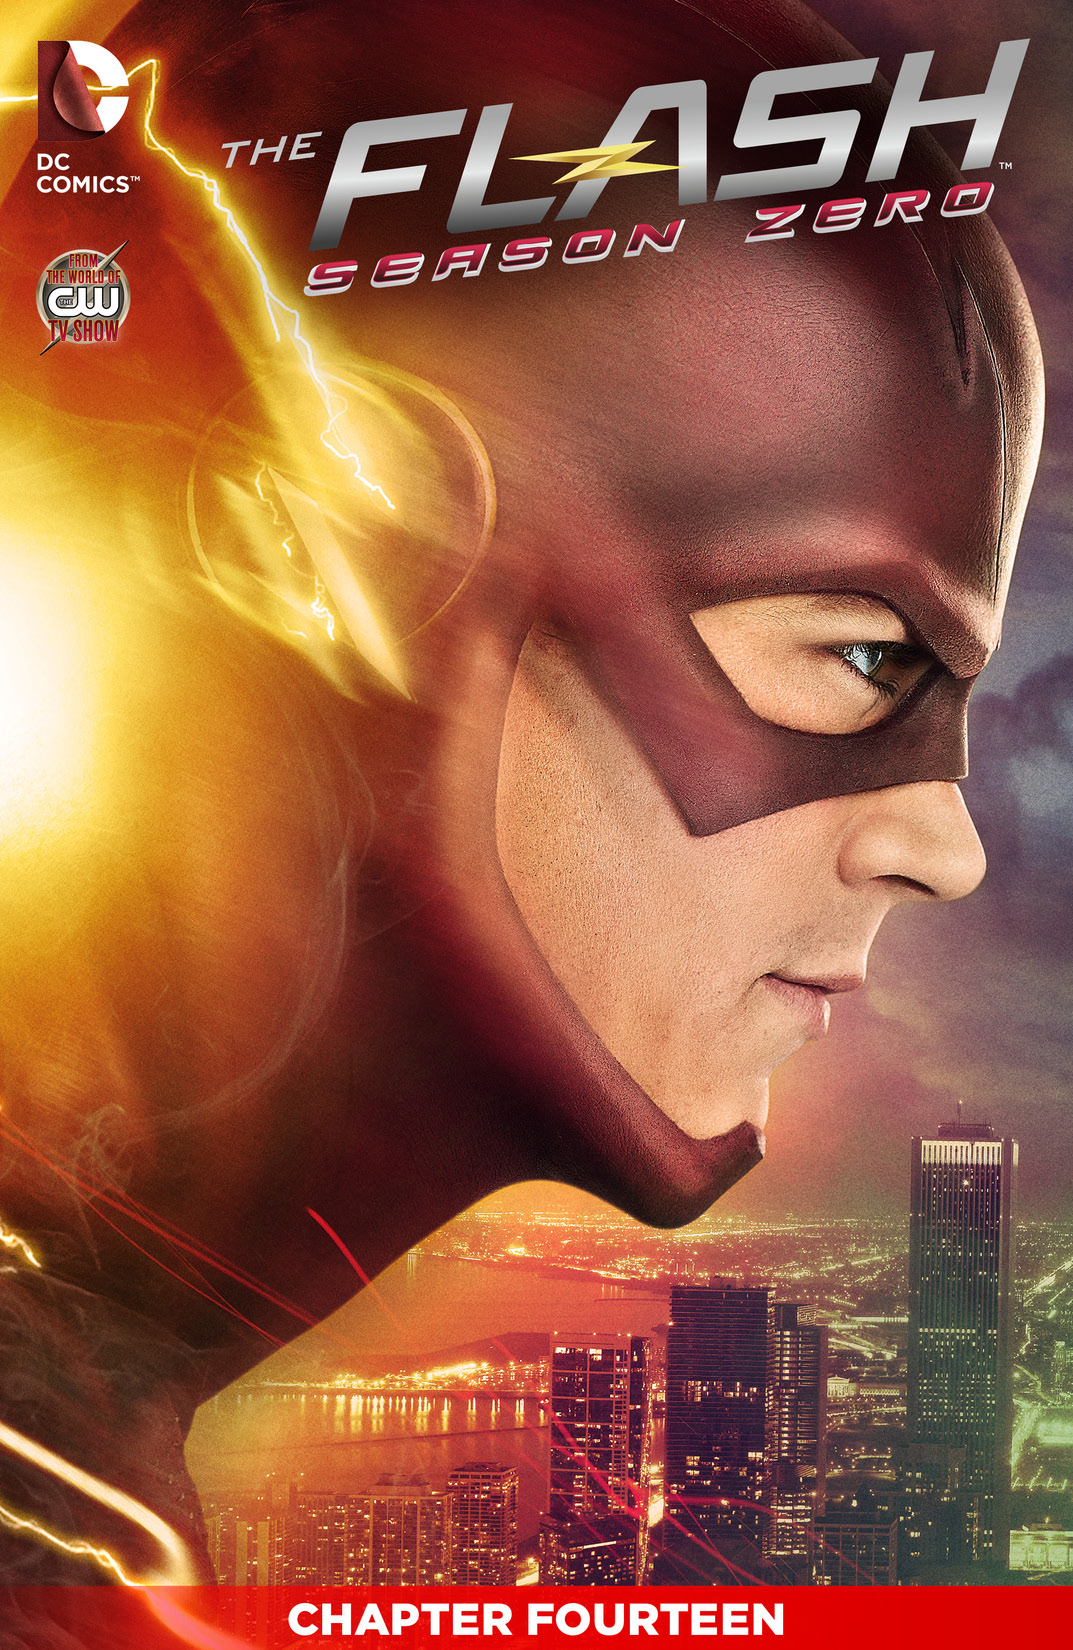 The Flash: Season Zero #14 preview images